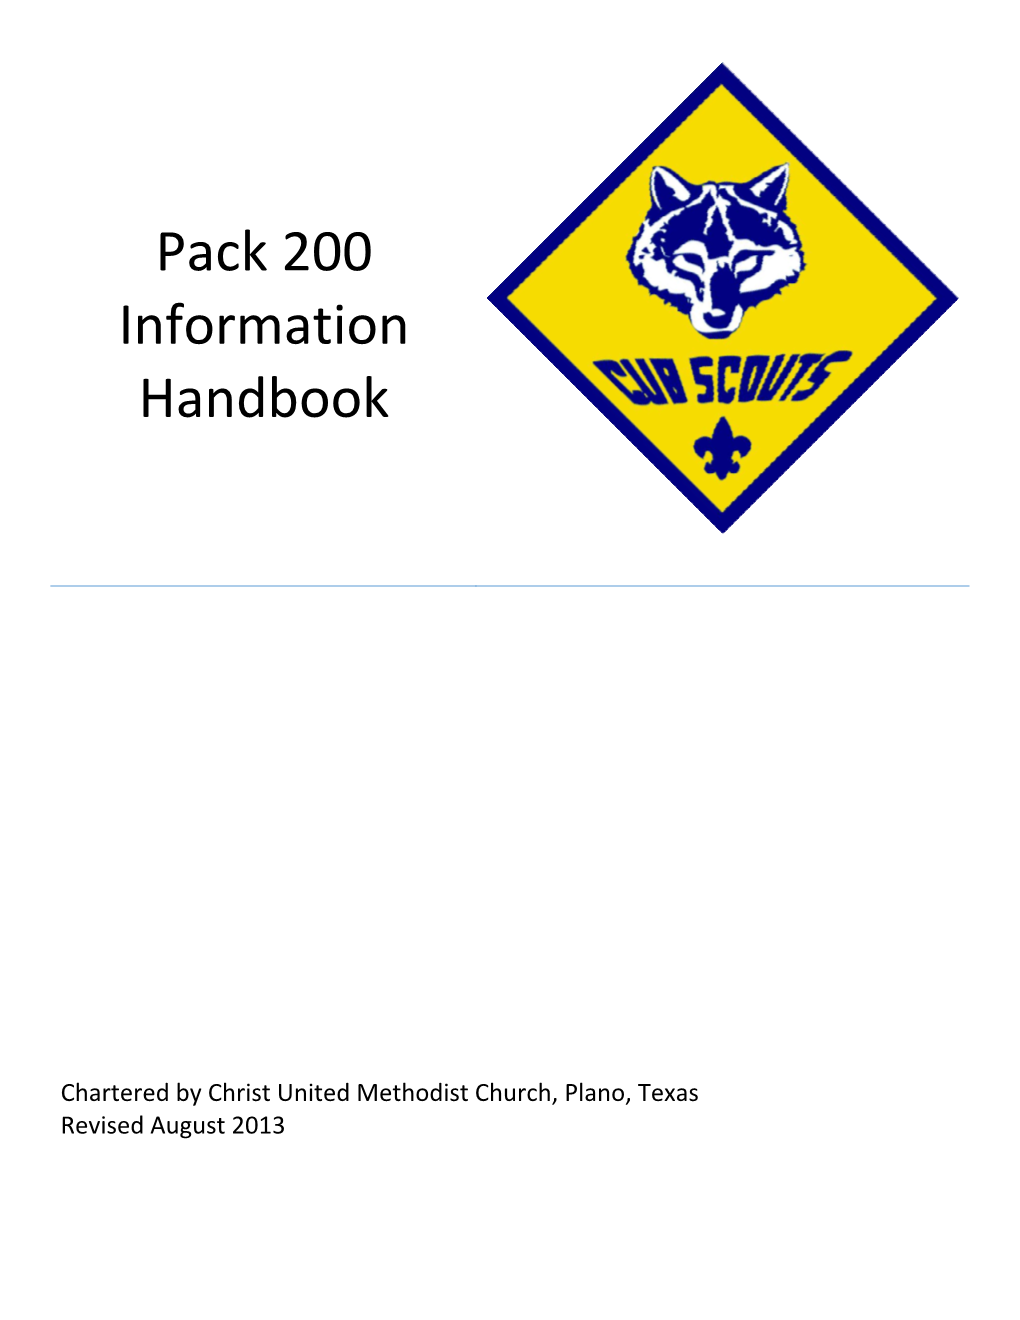 Pack 200 Information Handbook